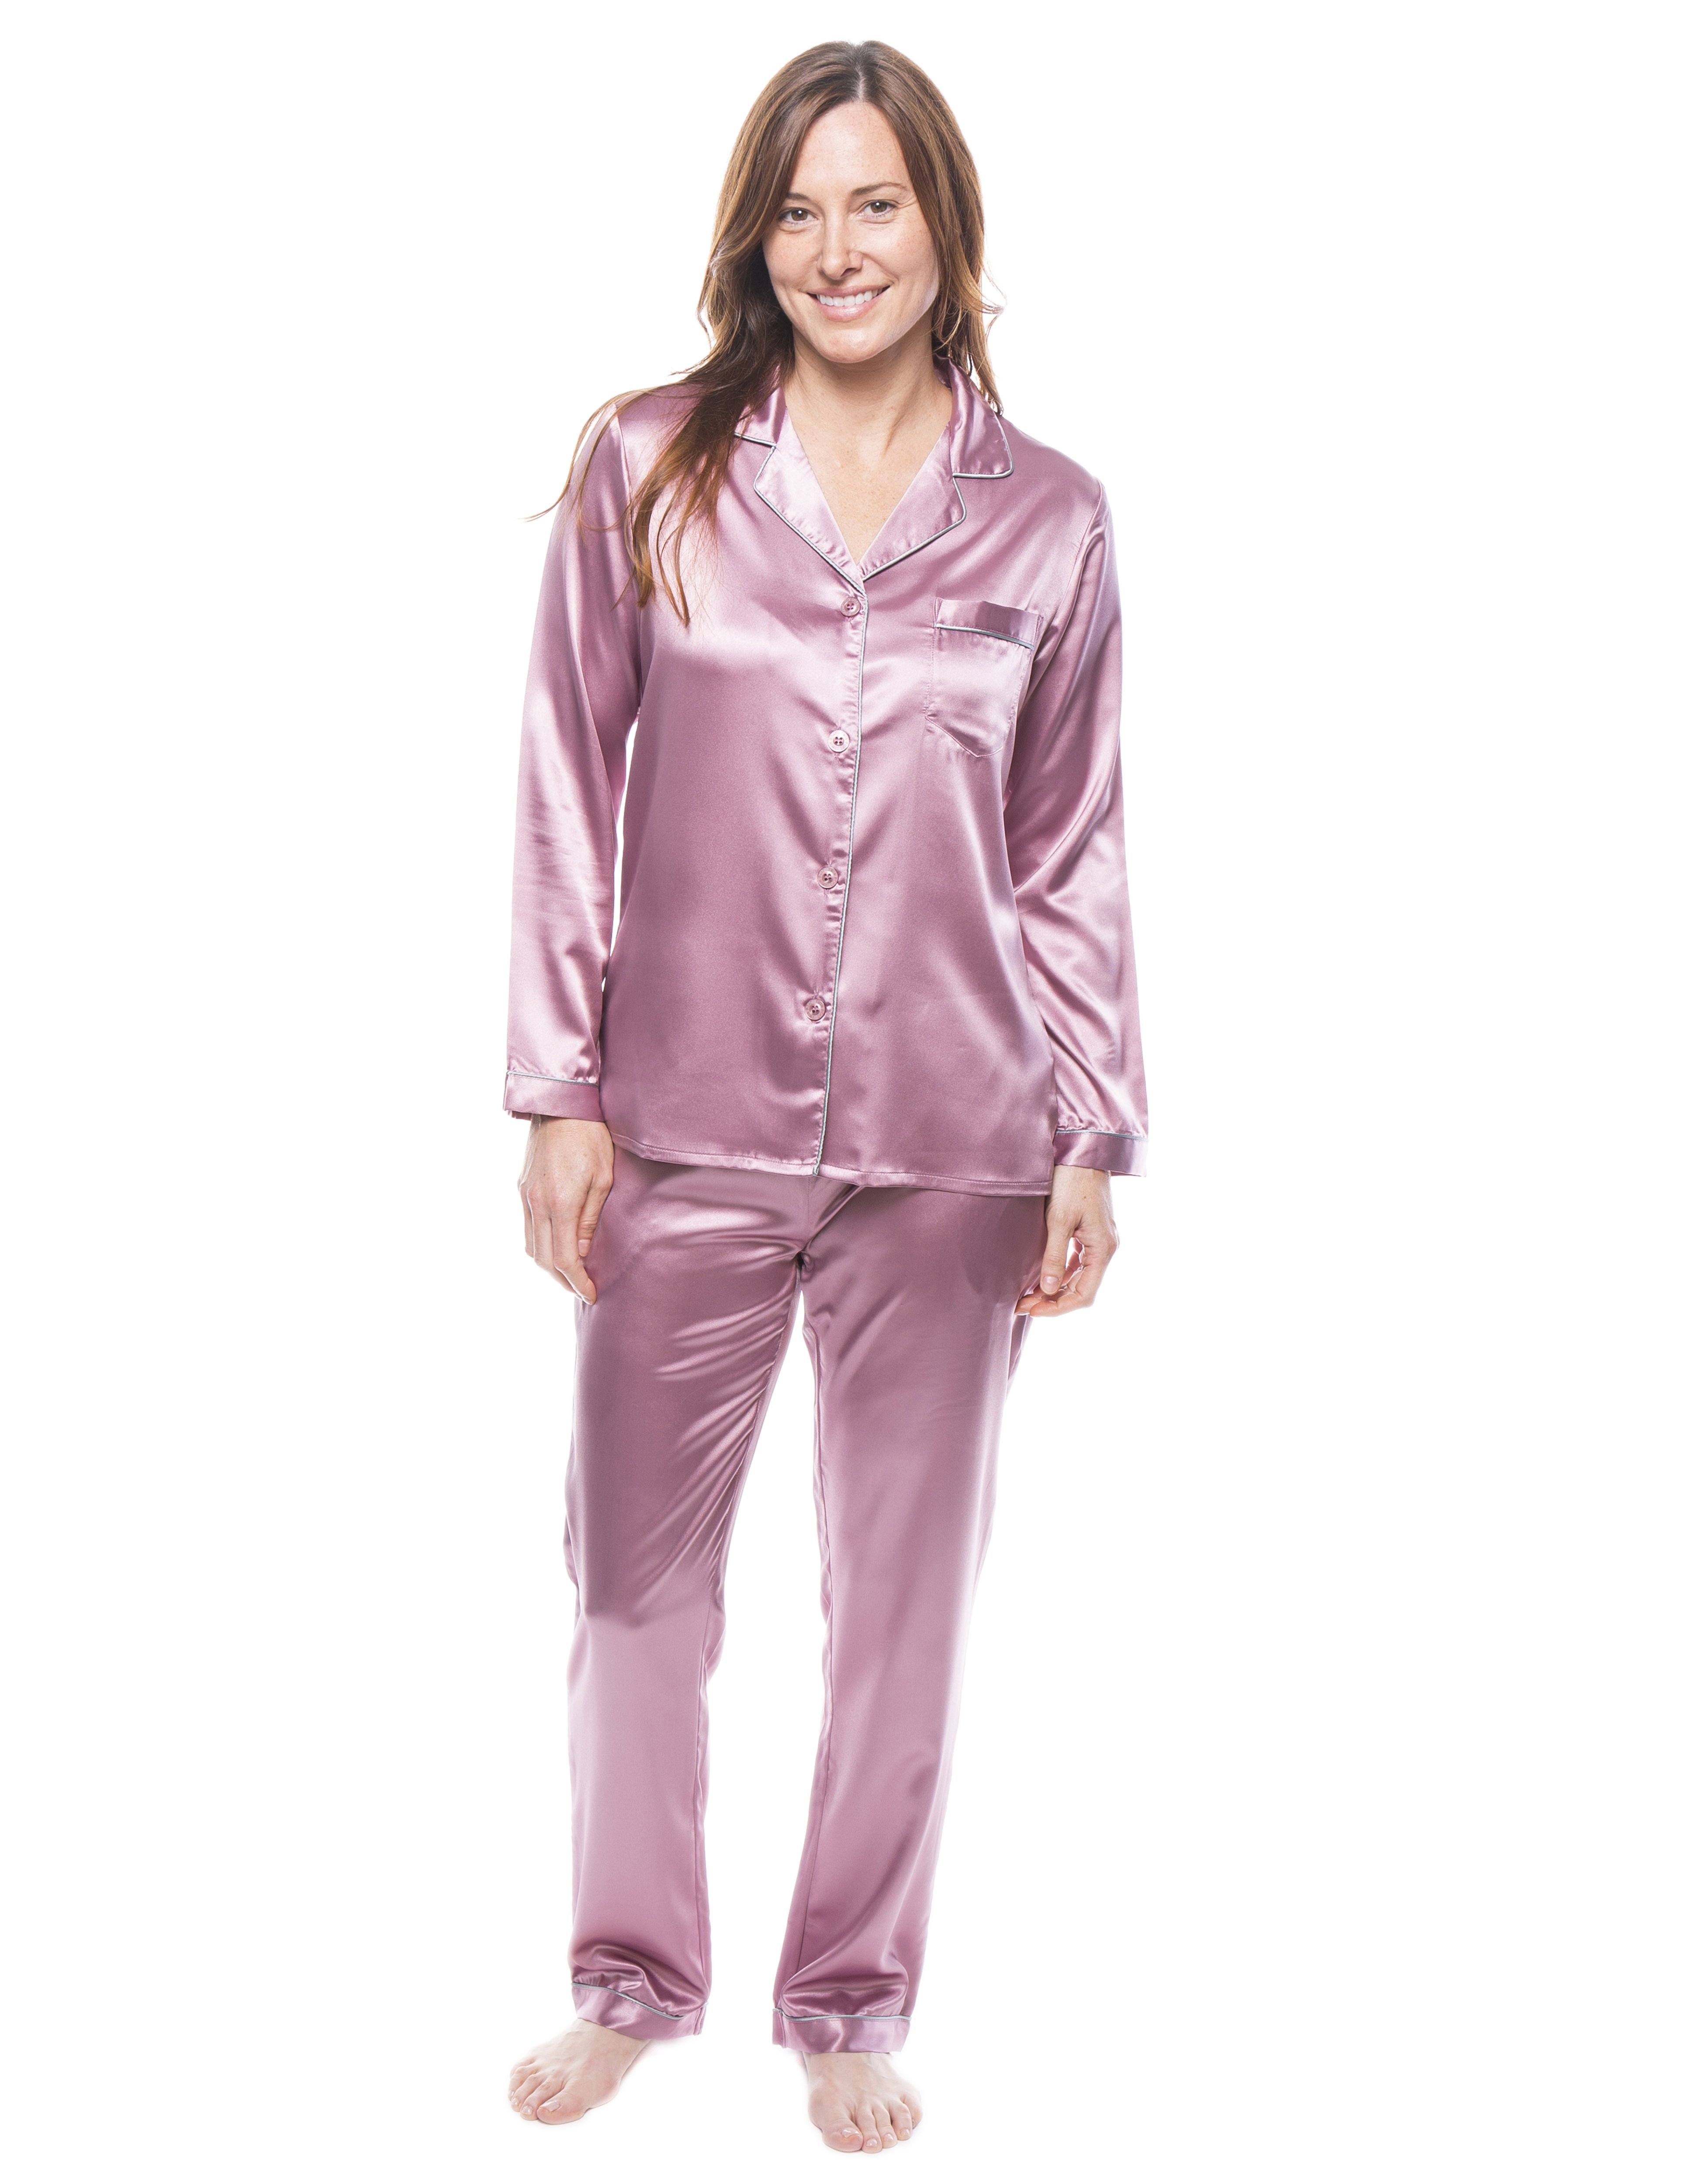 Women's Satin Pajama/Sleepwear Set